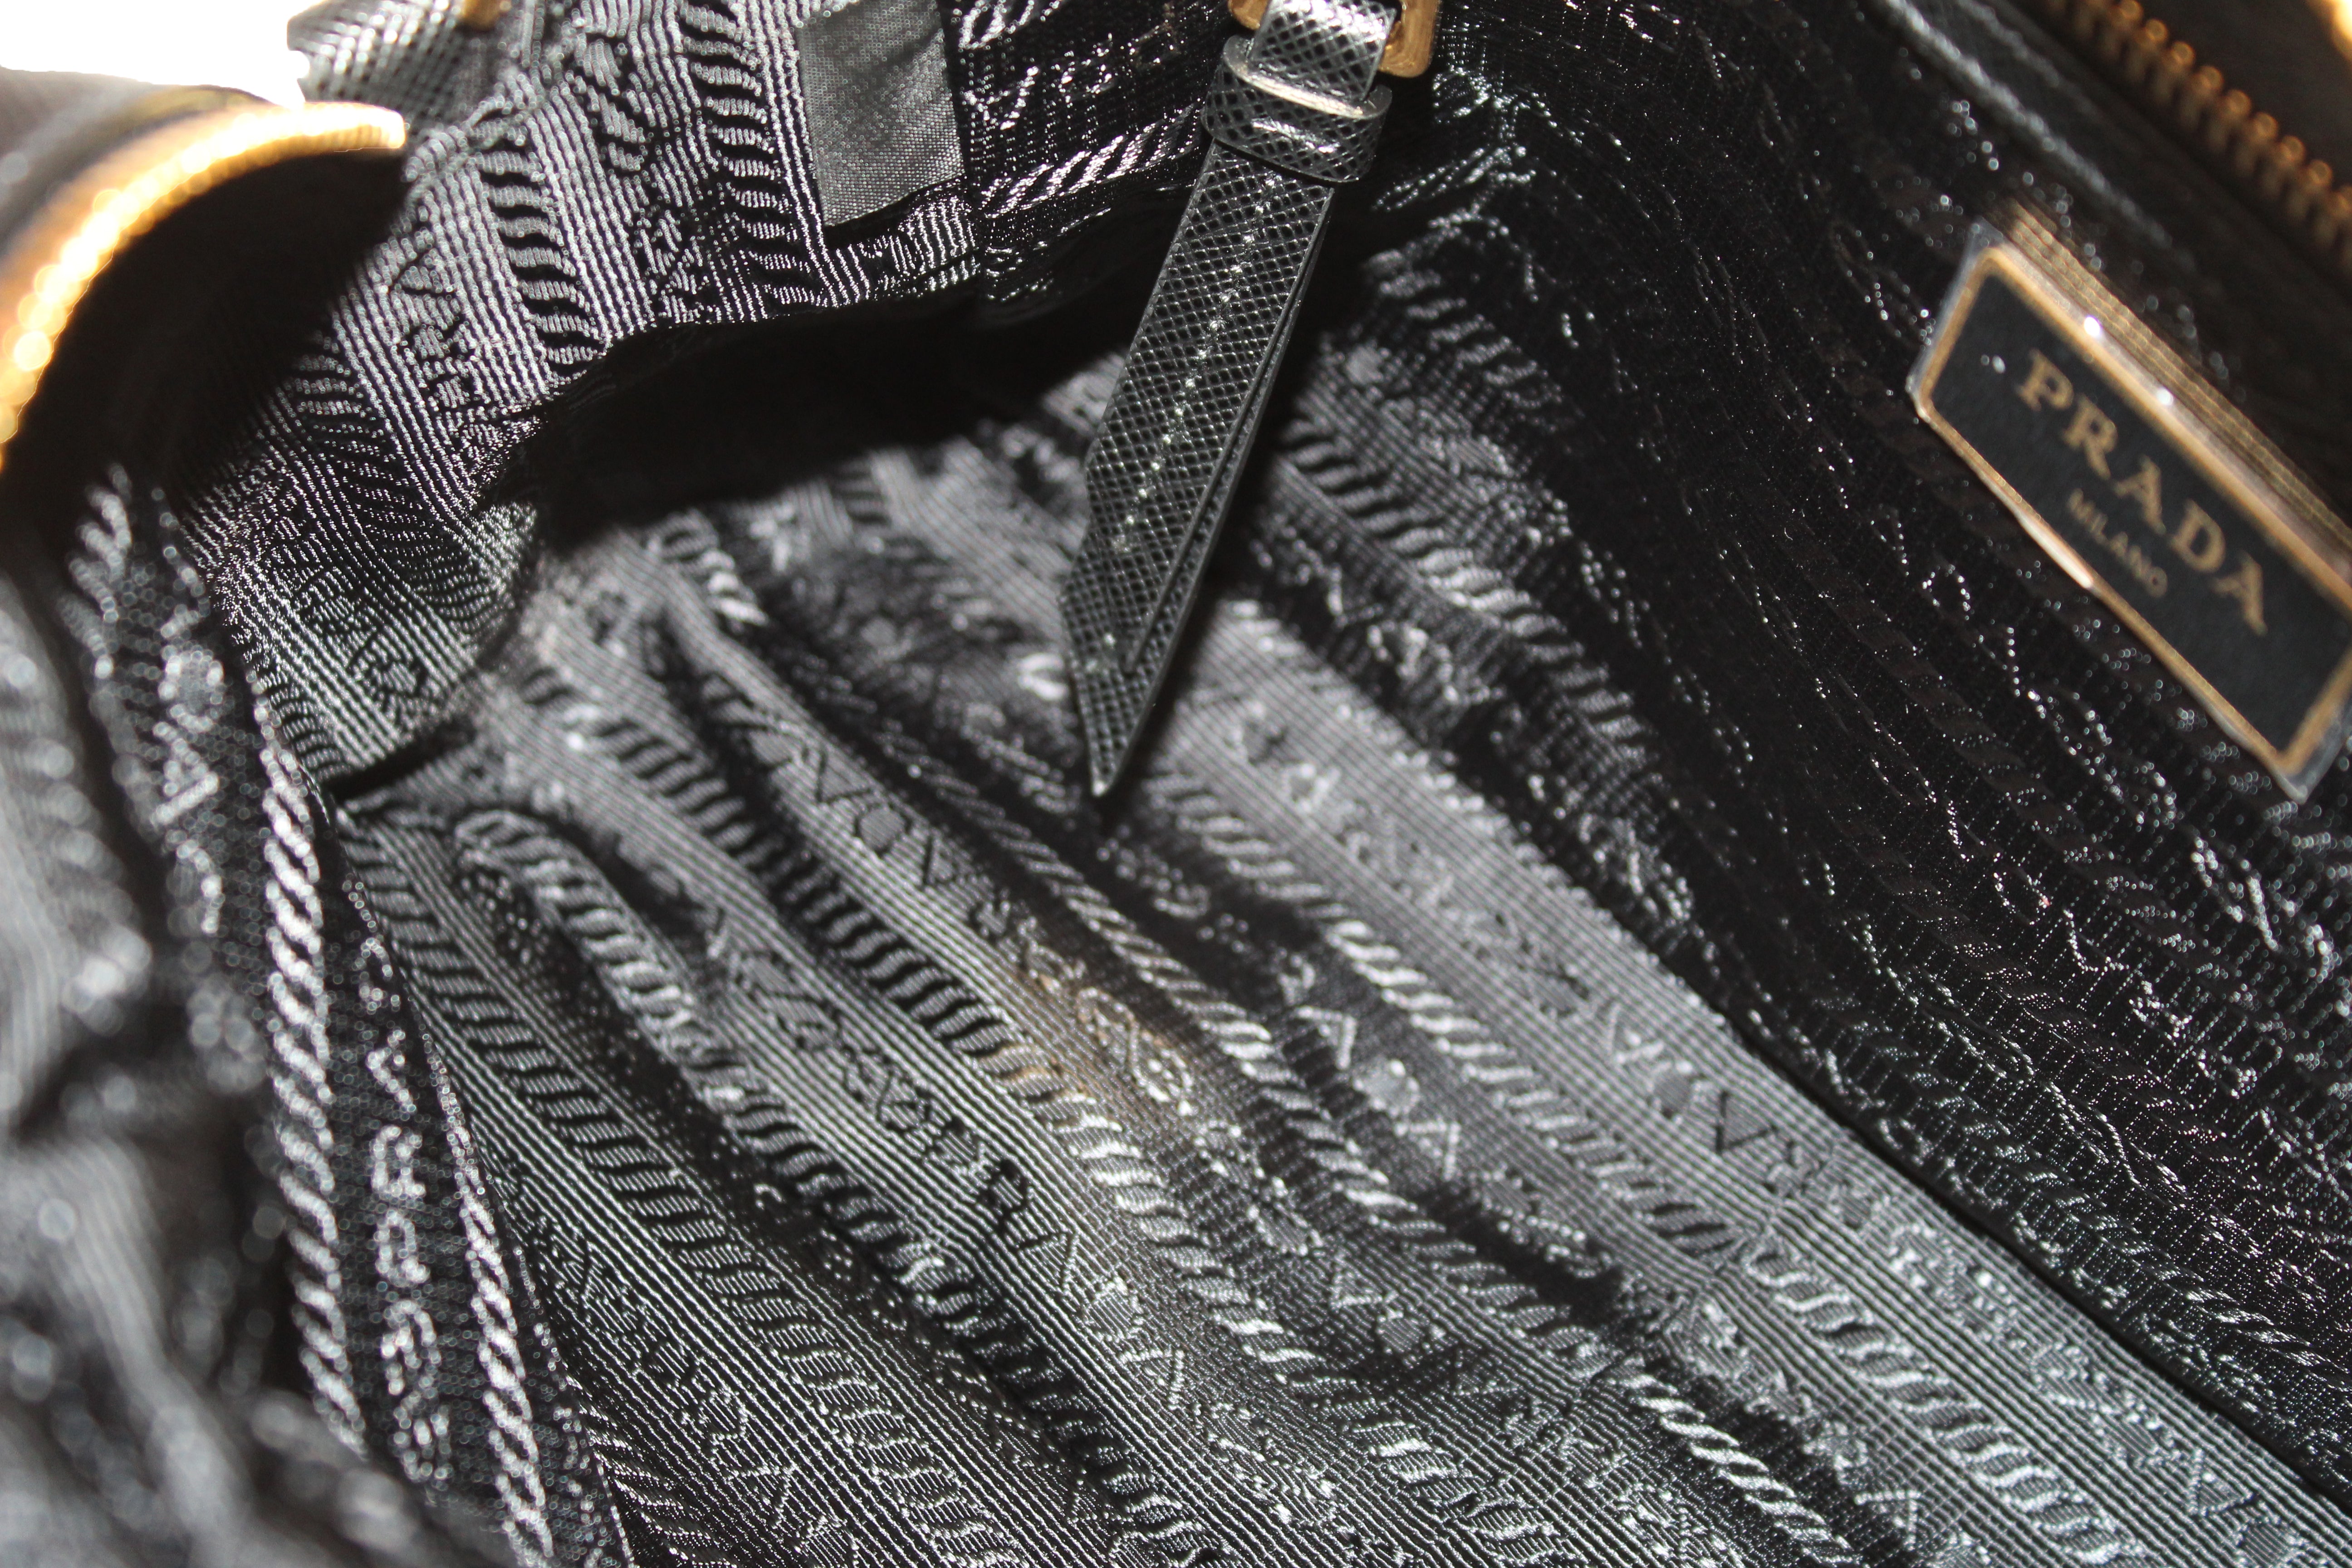 Authentic NEW Prada Black Nylon Tessuto Messenger Camera Bag